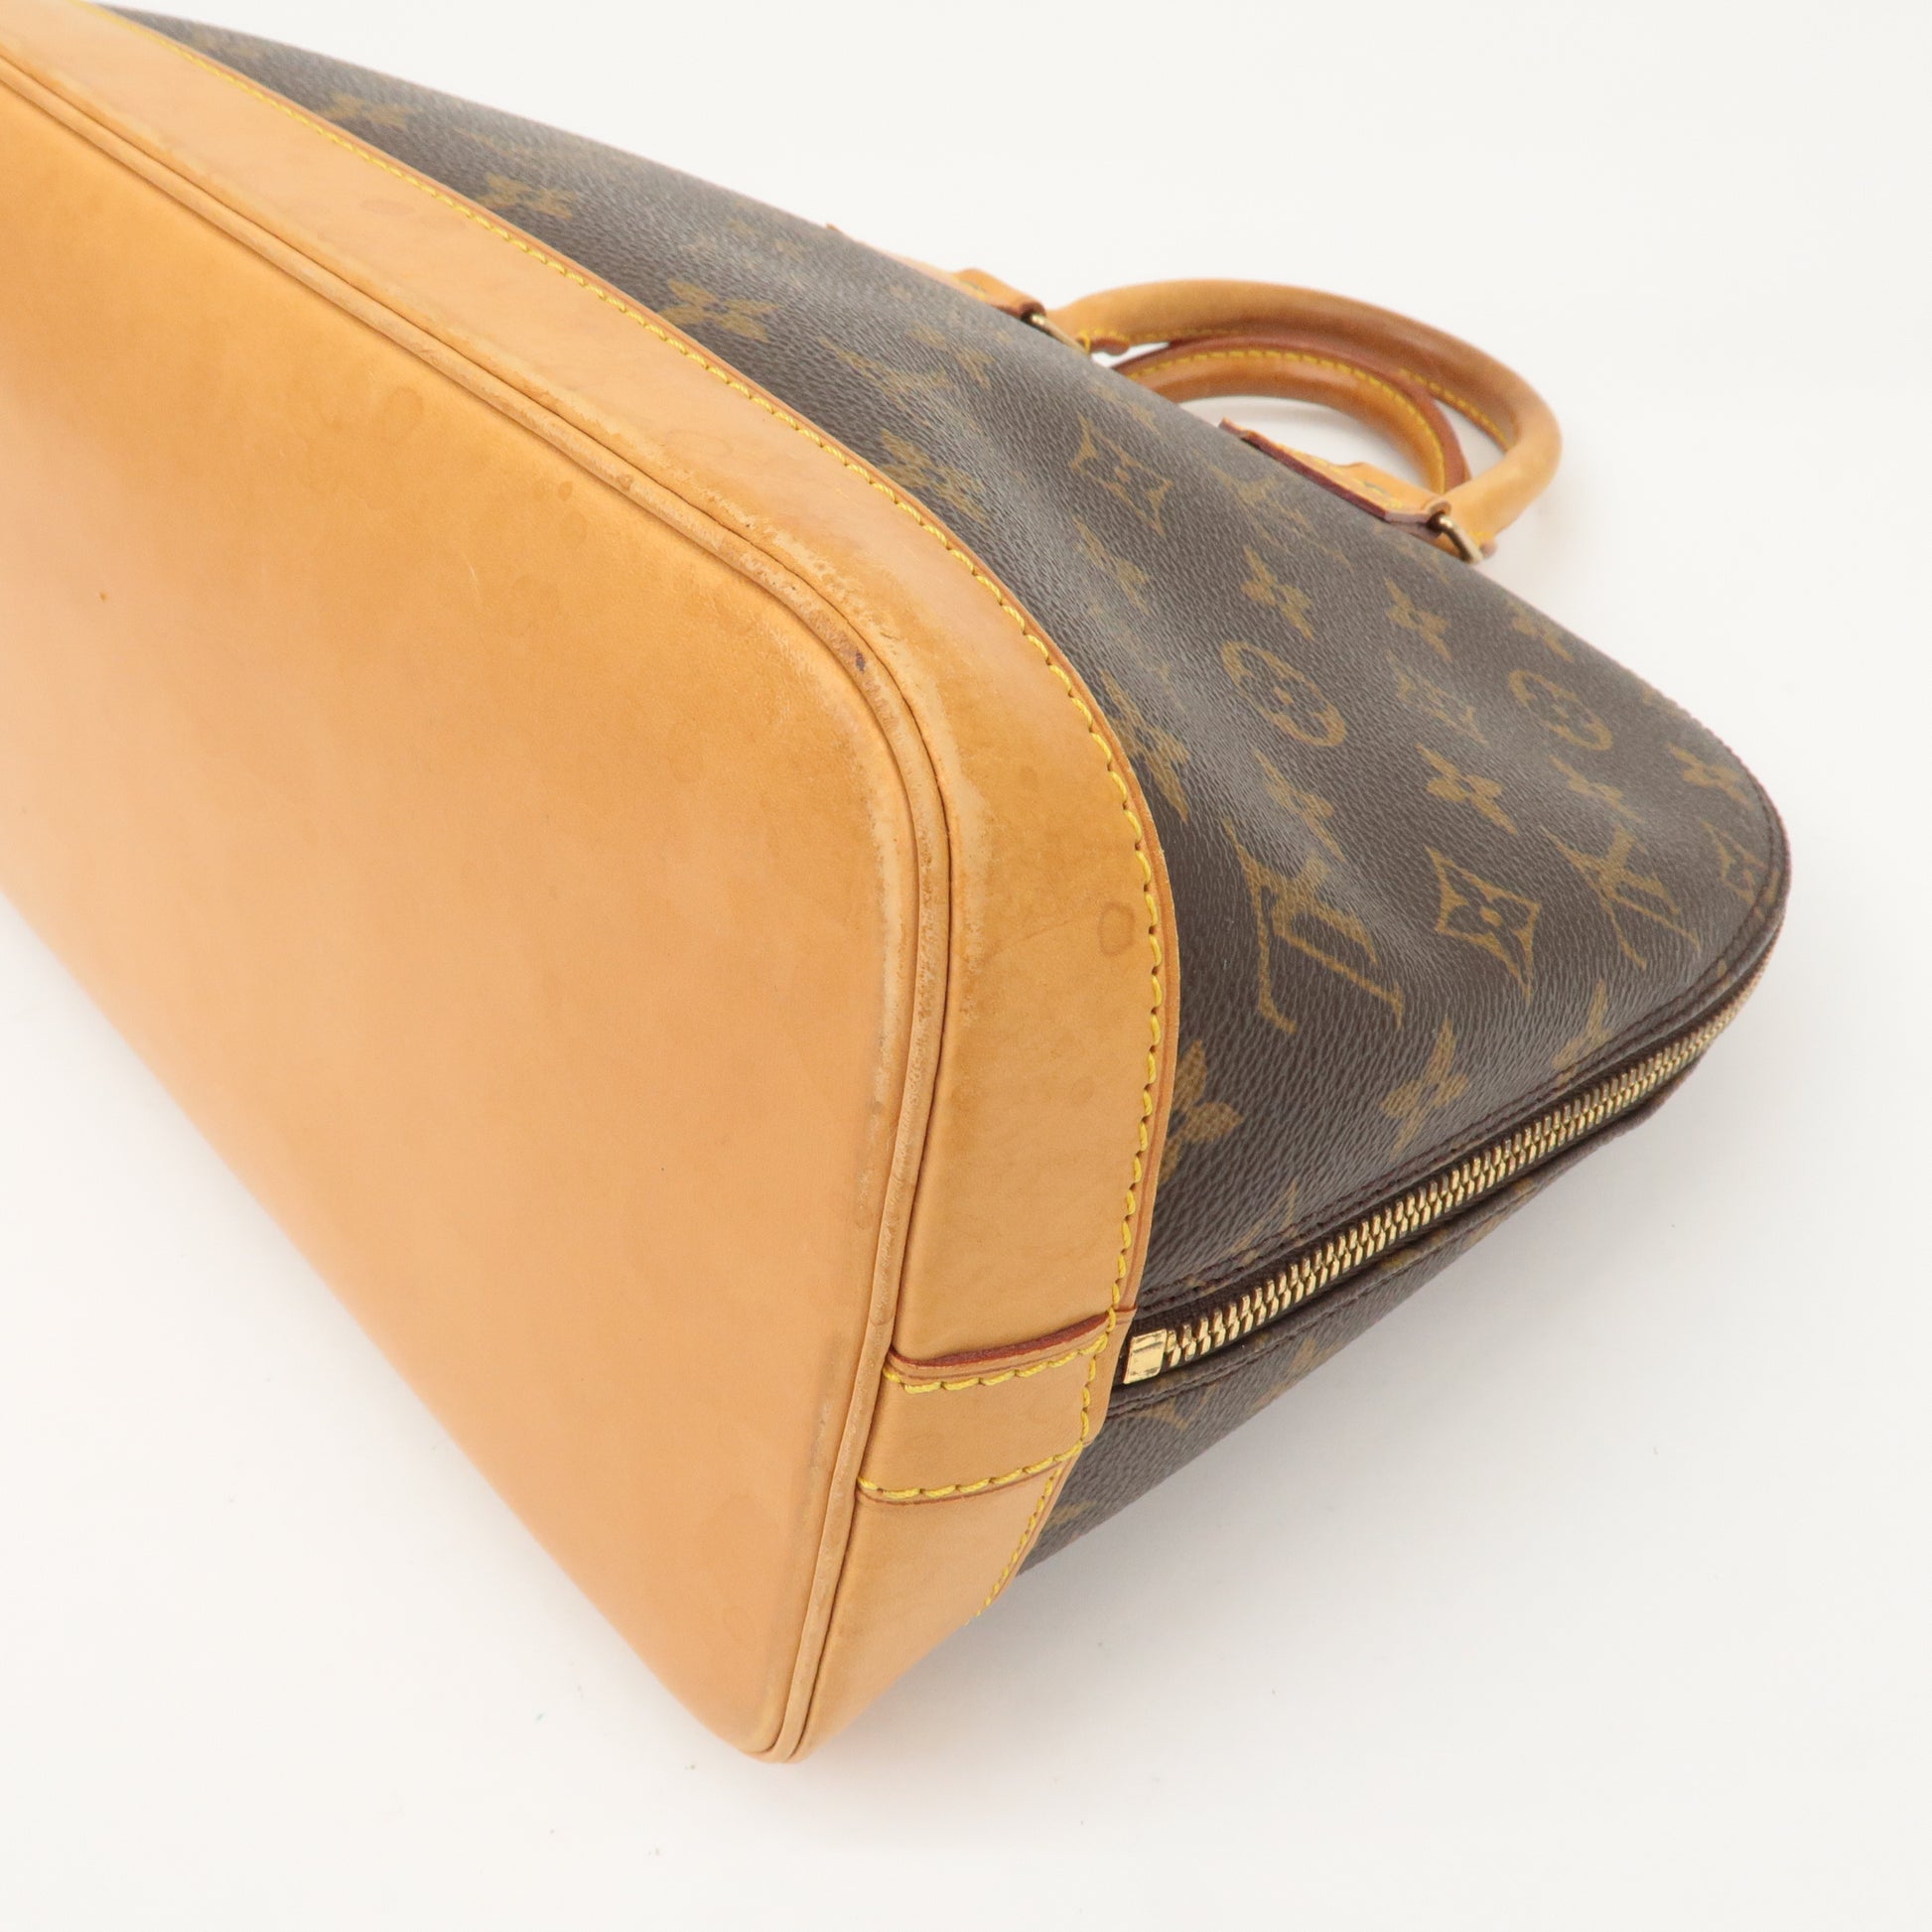 Louis Vuitton Alma Tote Bags